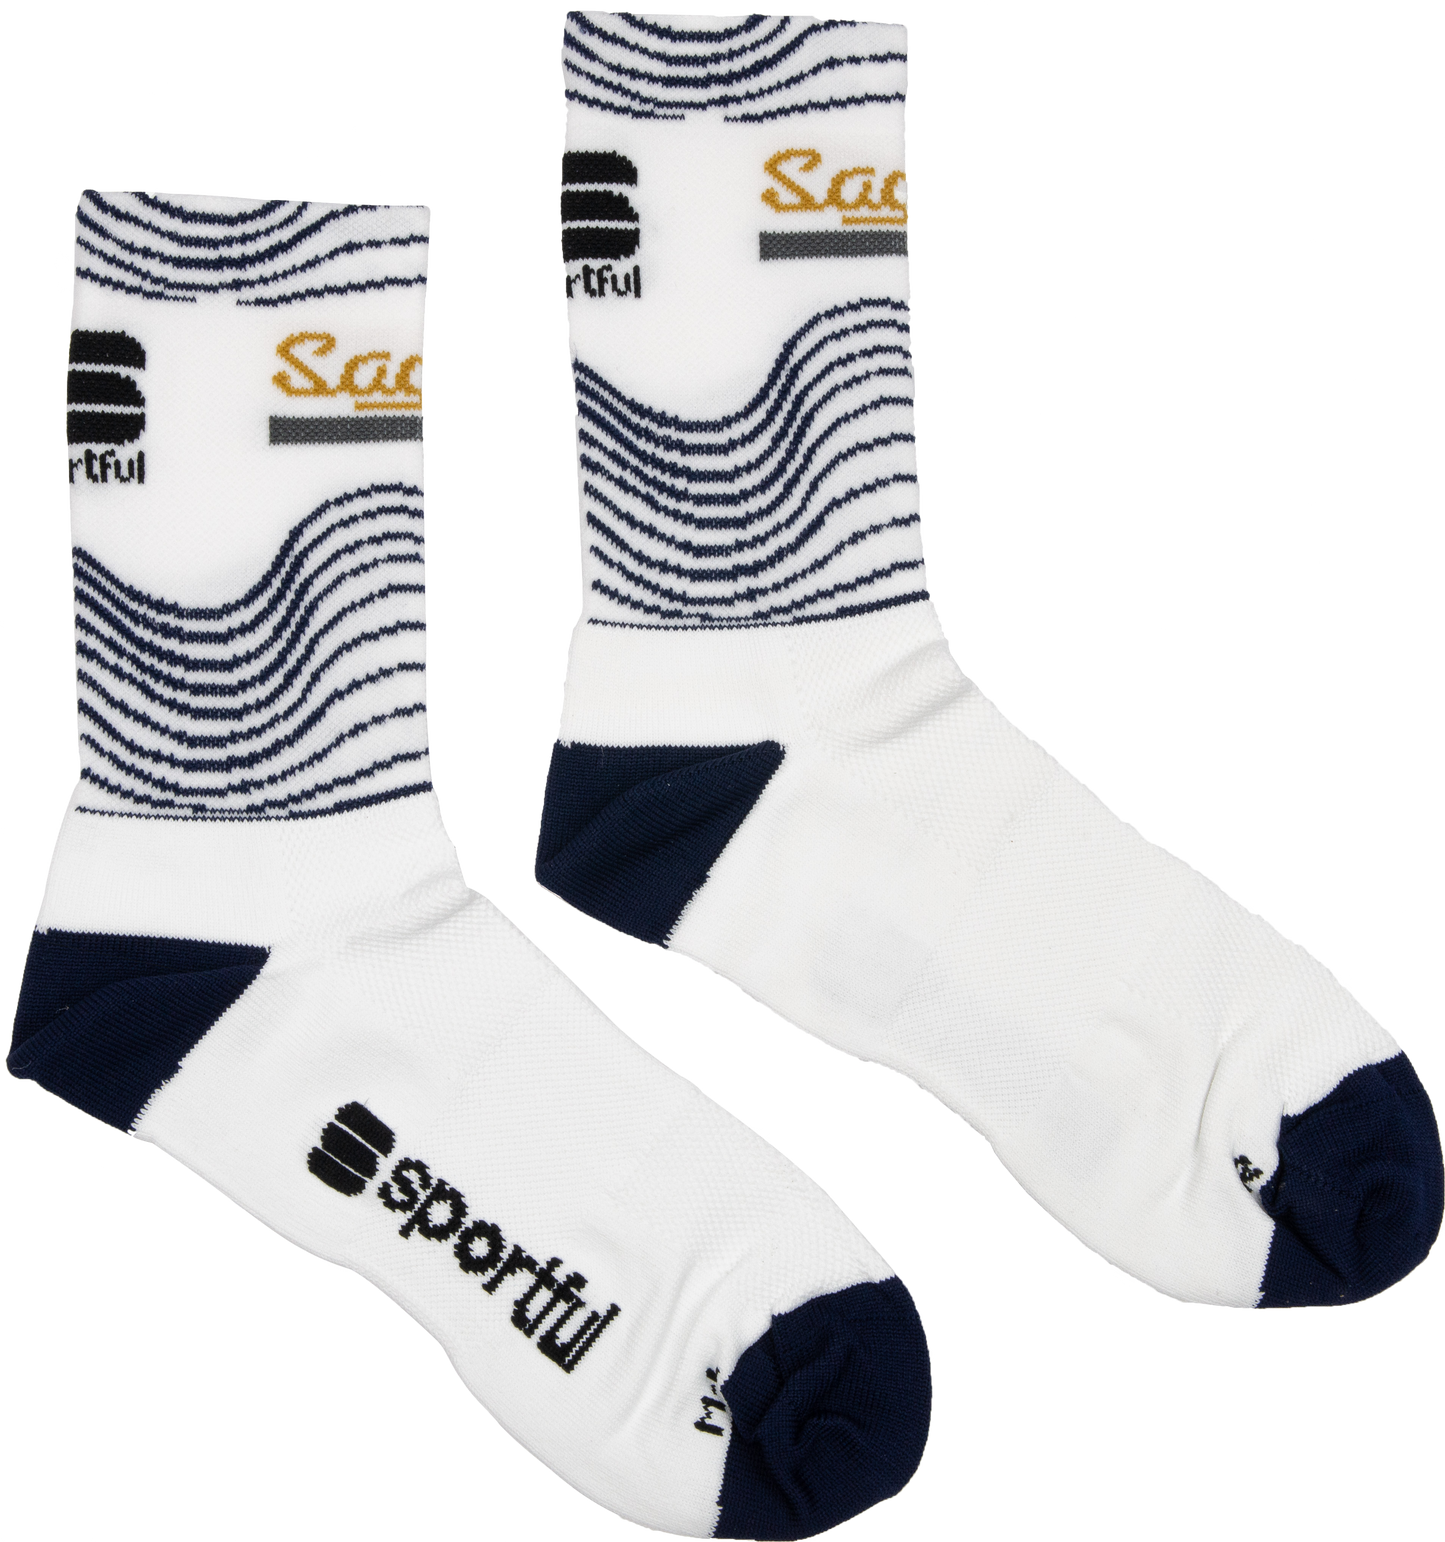 Sagan Fondo Road Edition - Socks